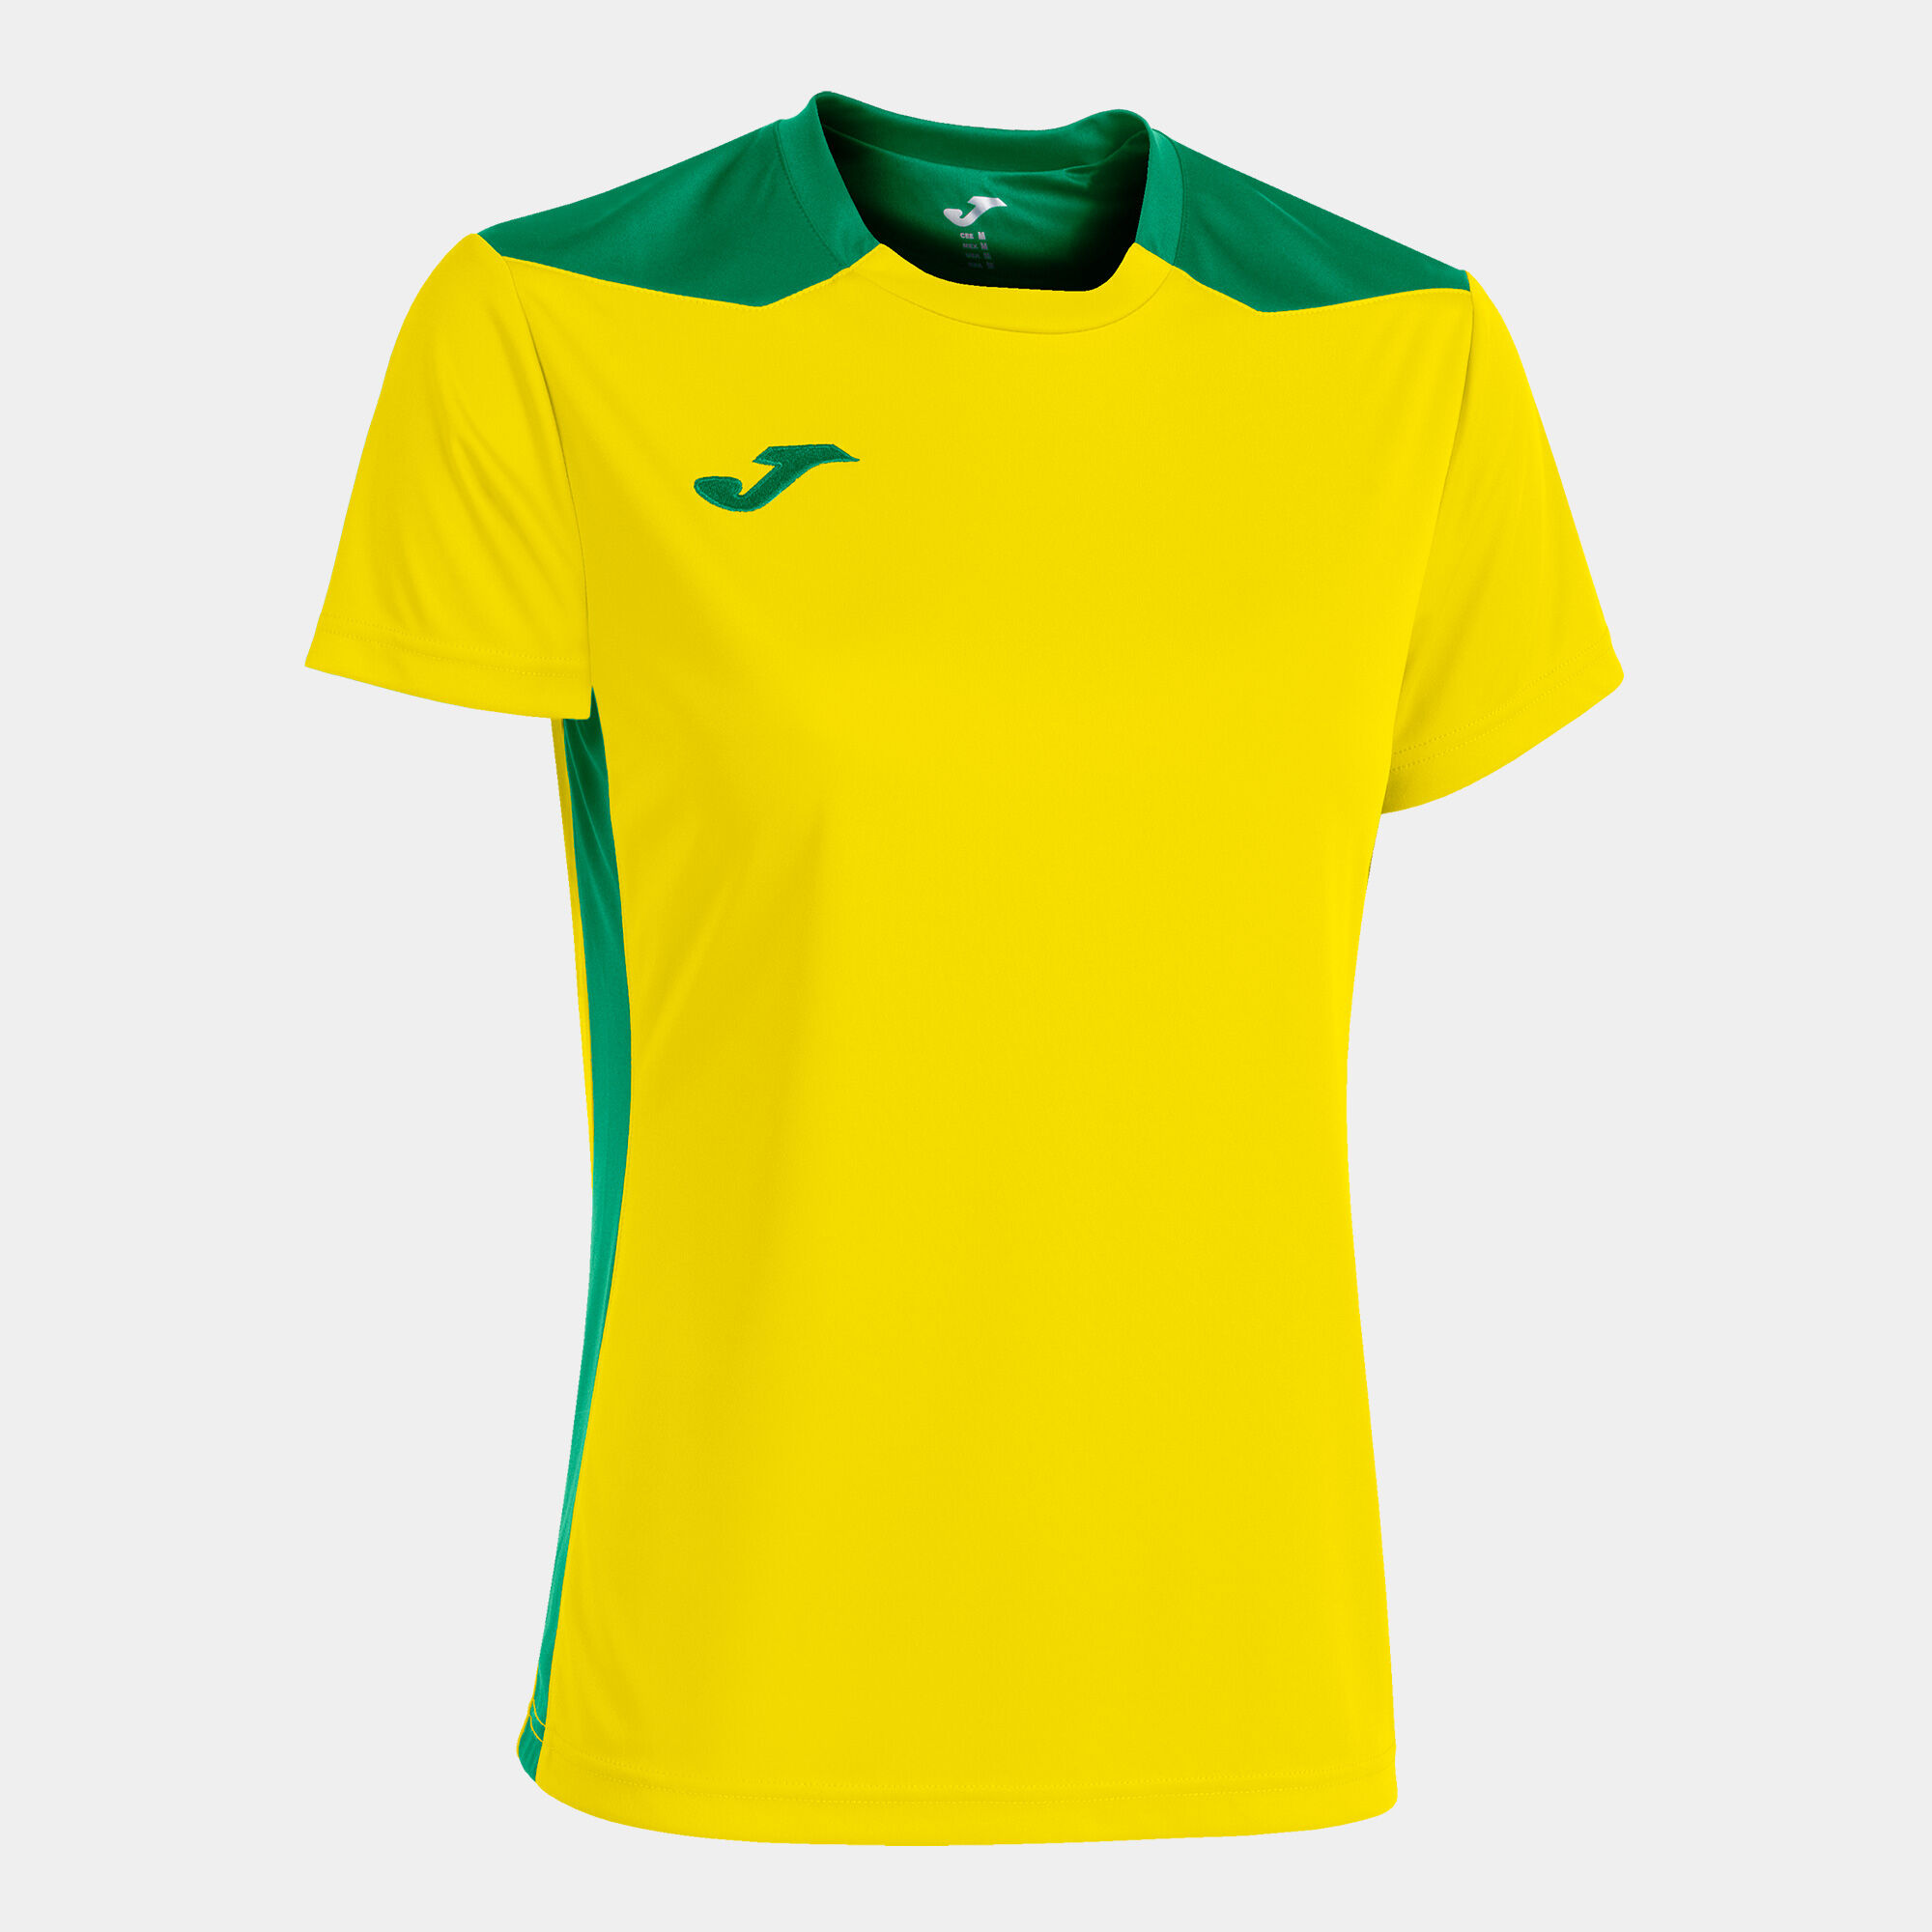 Camiseta manga corta mujer Championship VI amarillo verde